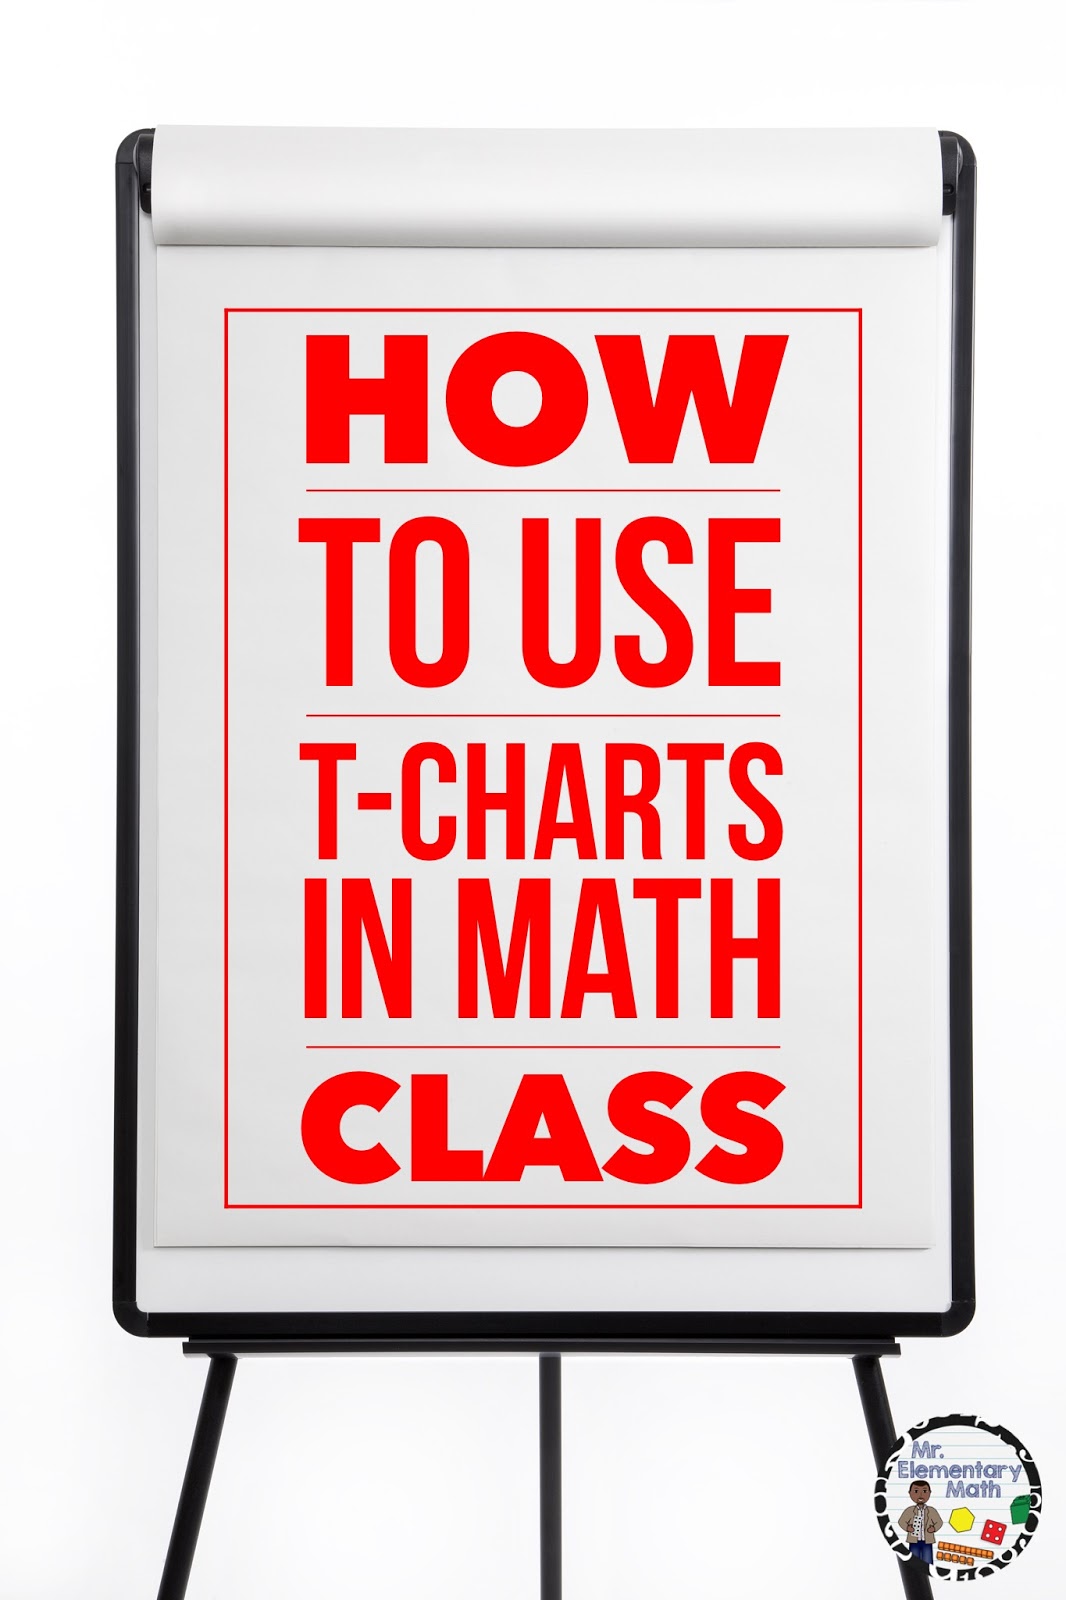 who-s-who-and-who-s-new-how-to-use-t-charts-in-math-class